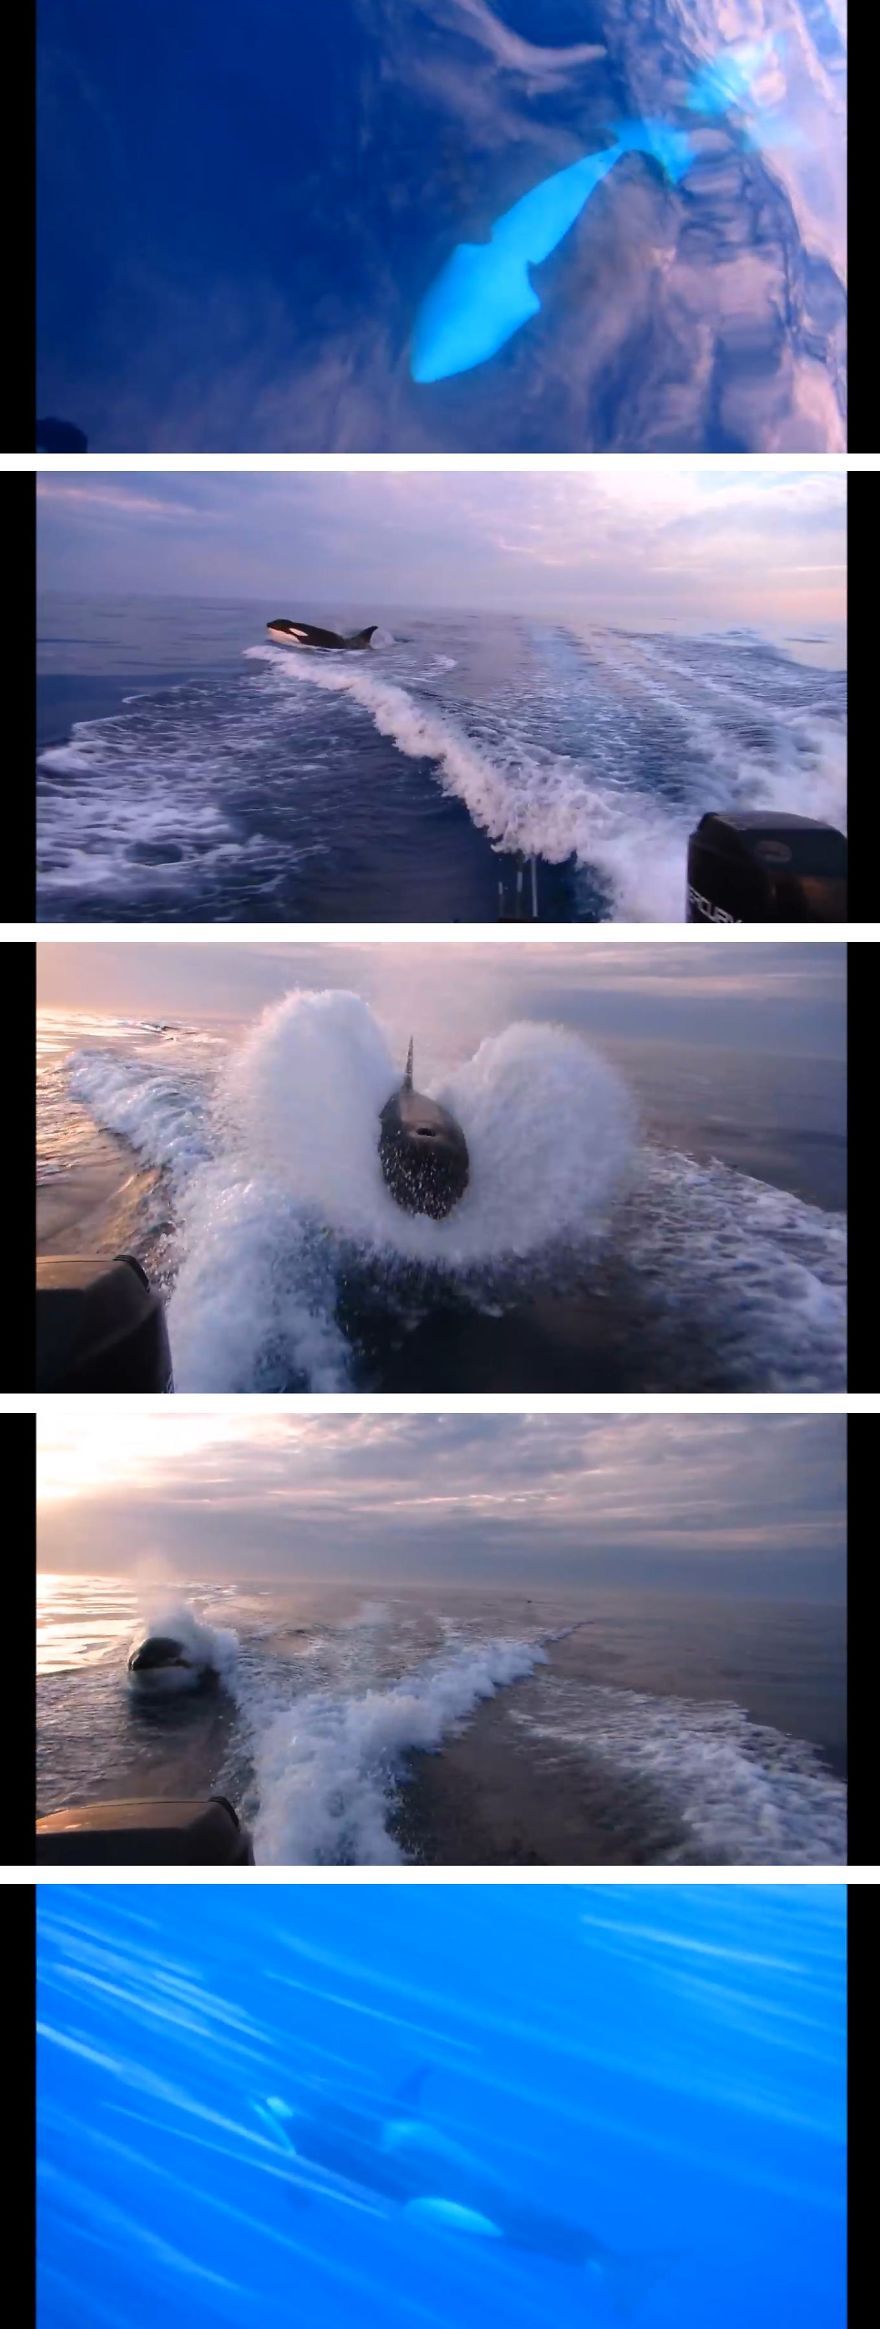 Orcas Chase Boat Near San Diego Bay